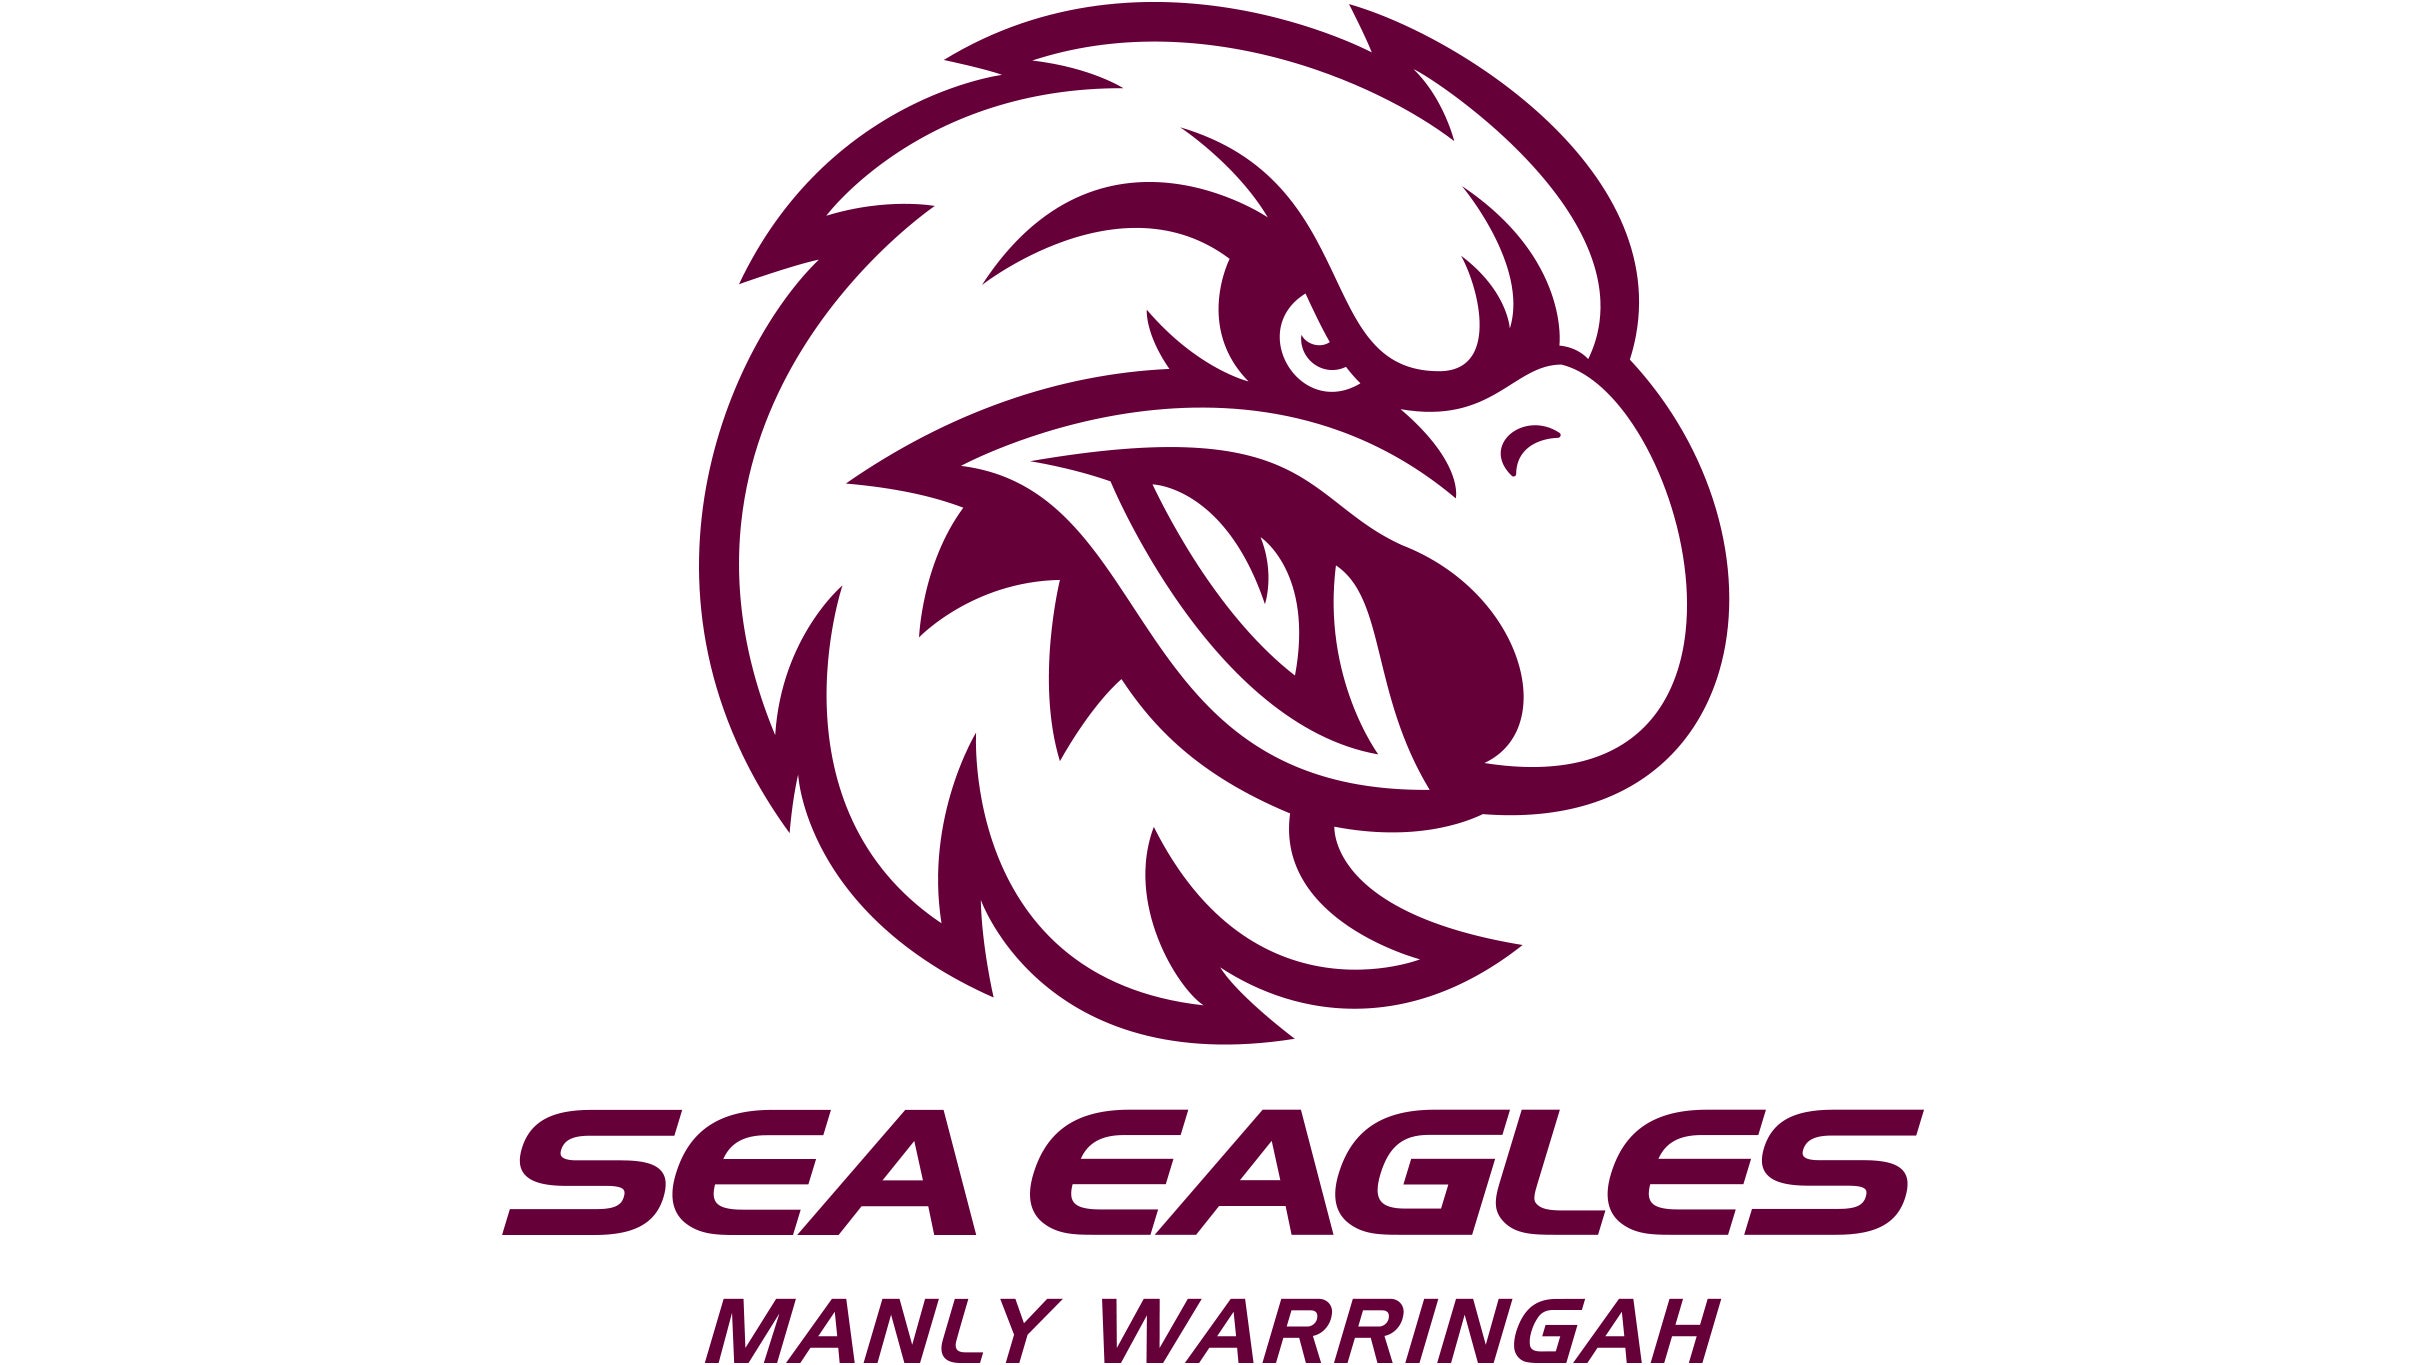 Manly Warringah Sea Eagles v Panthers in Brookvale promo photo for Sea Eagles Member presale offer code